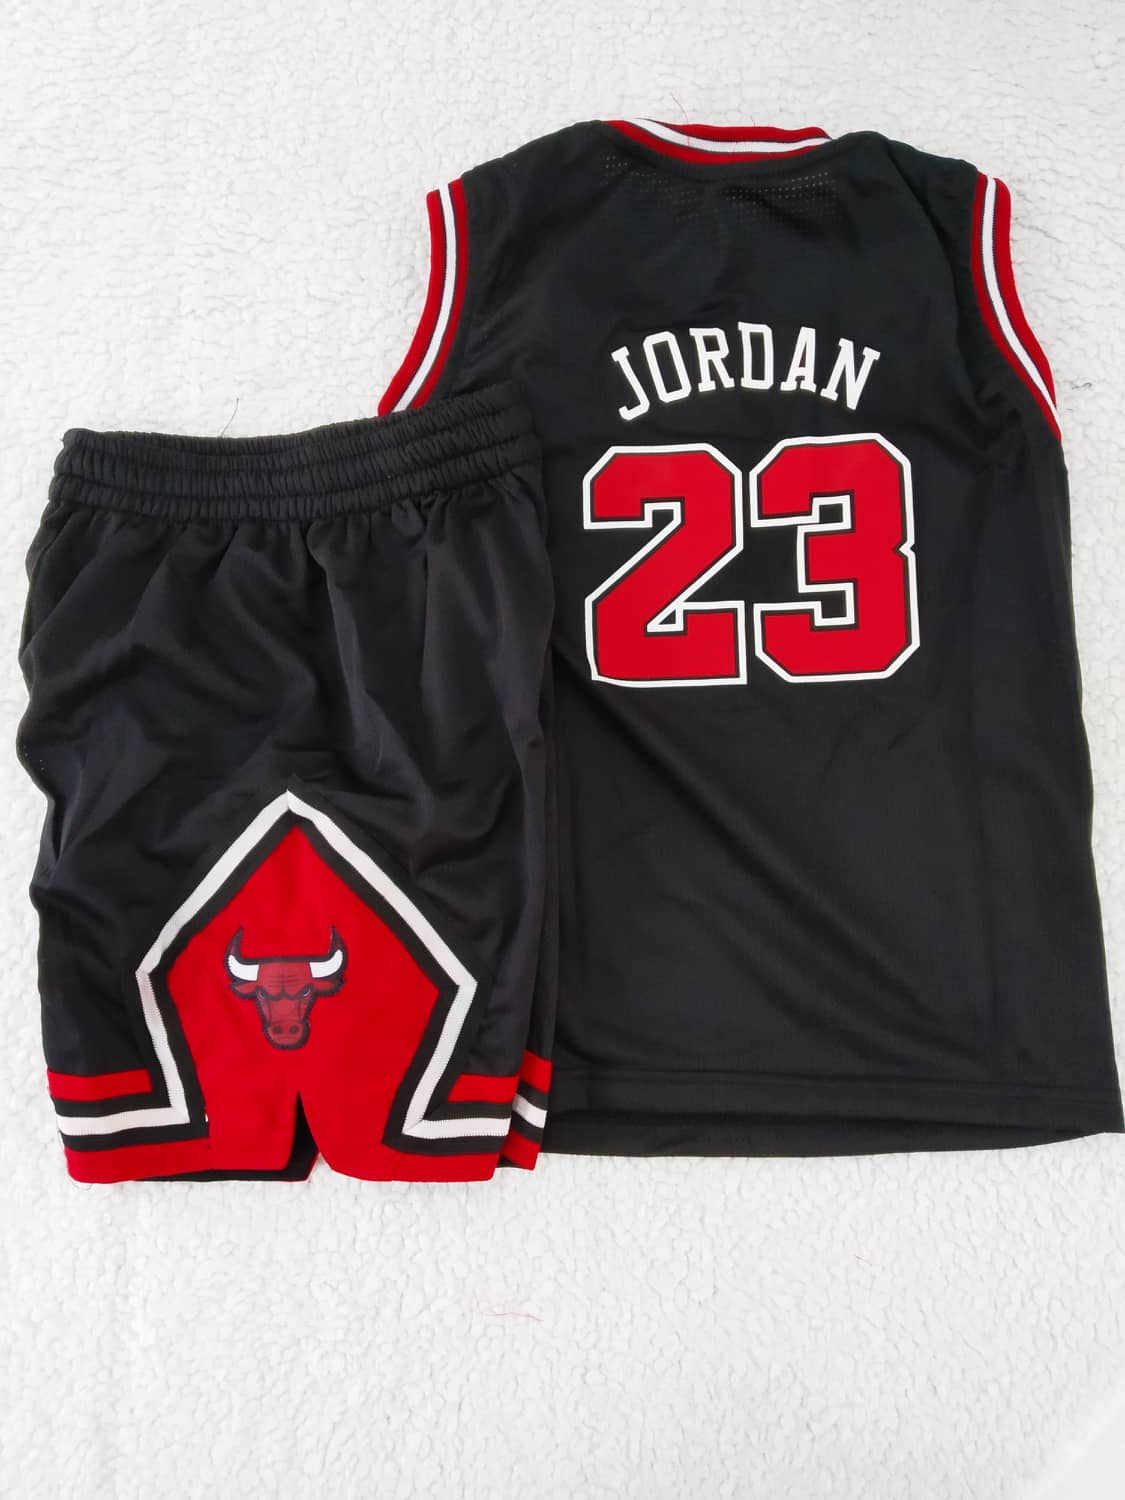 jordan jersey and shorts